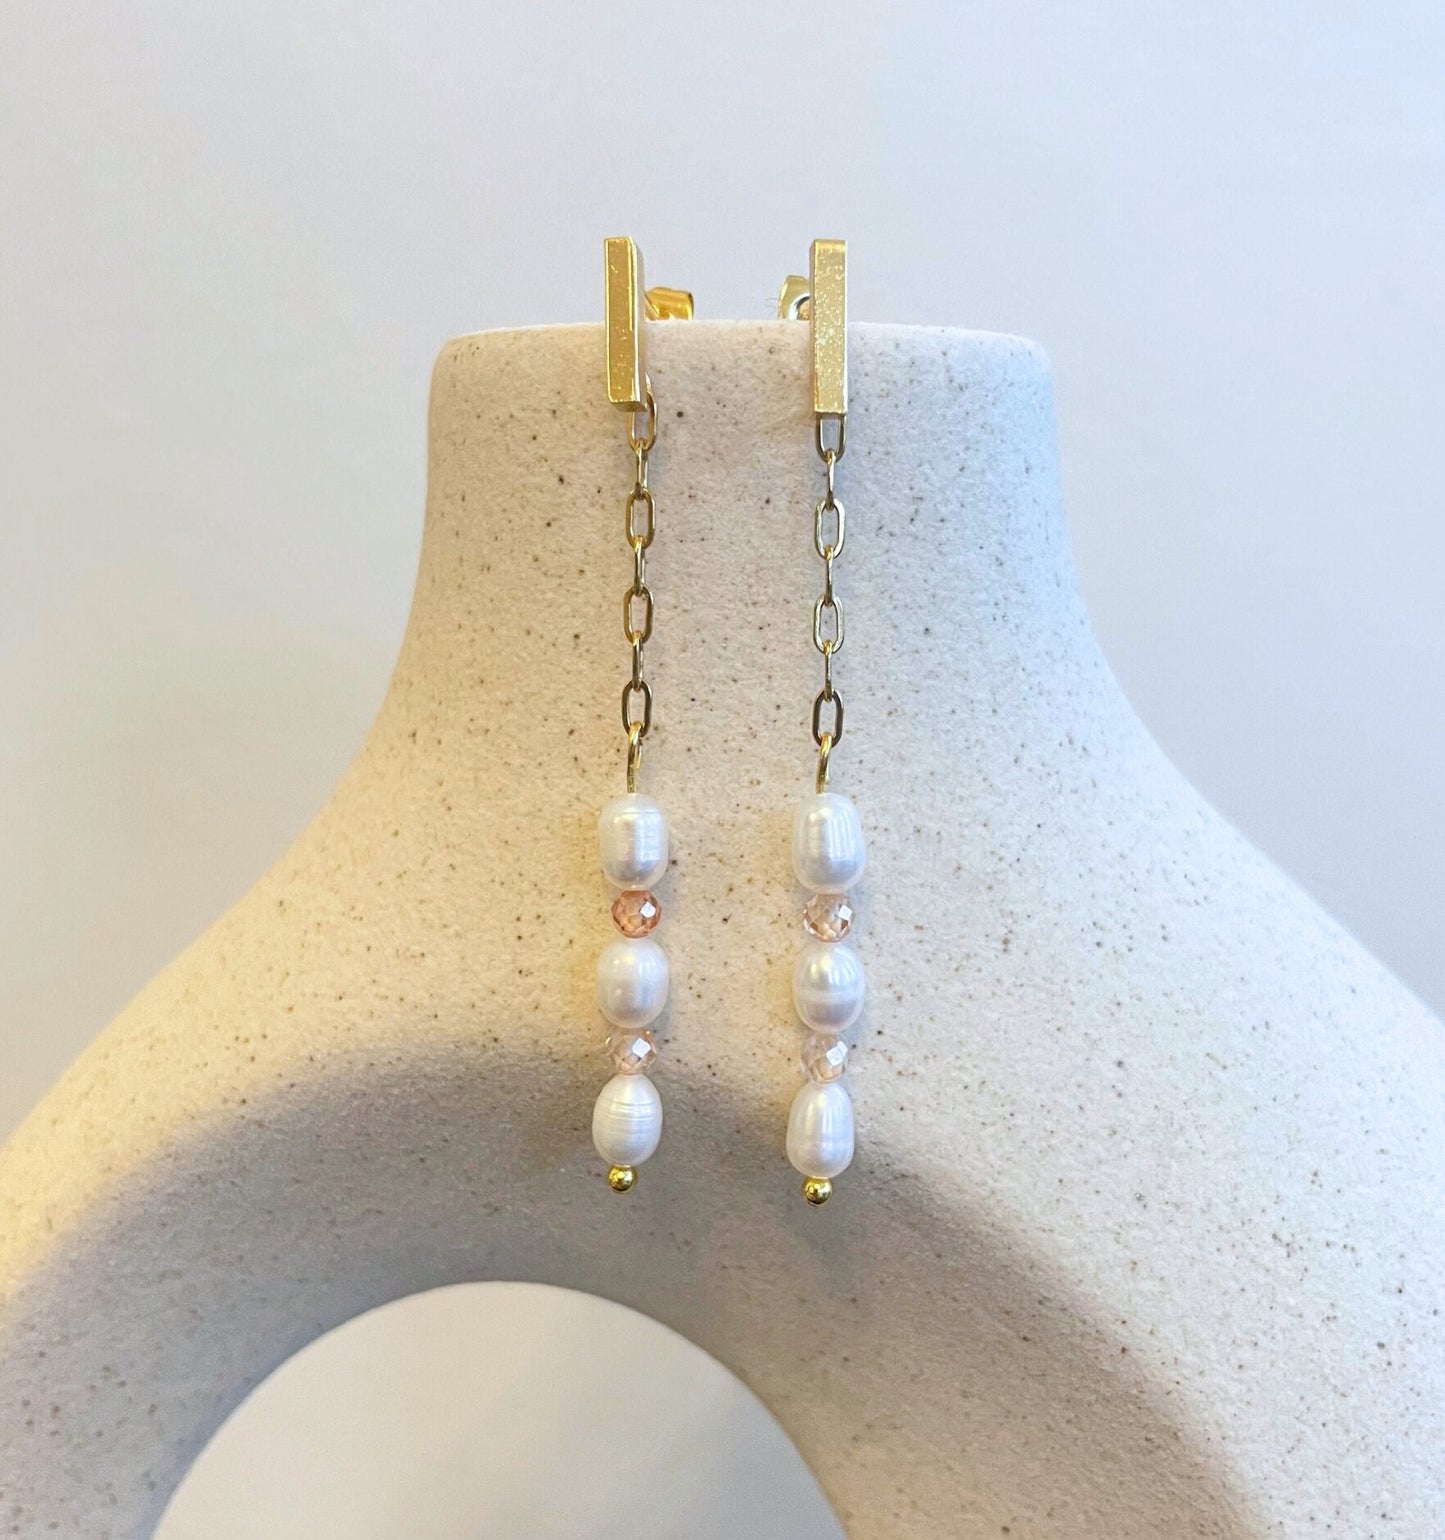 Elegant Long Link Chain Tassel Freshwater Pearls Bar Gold Stud Earrings - Dainty Delicate Wedding Natural Dangling Drop Pearl Earrings